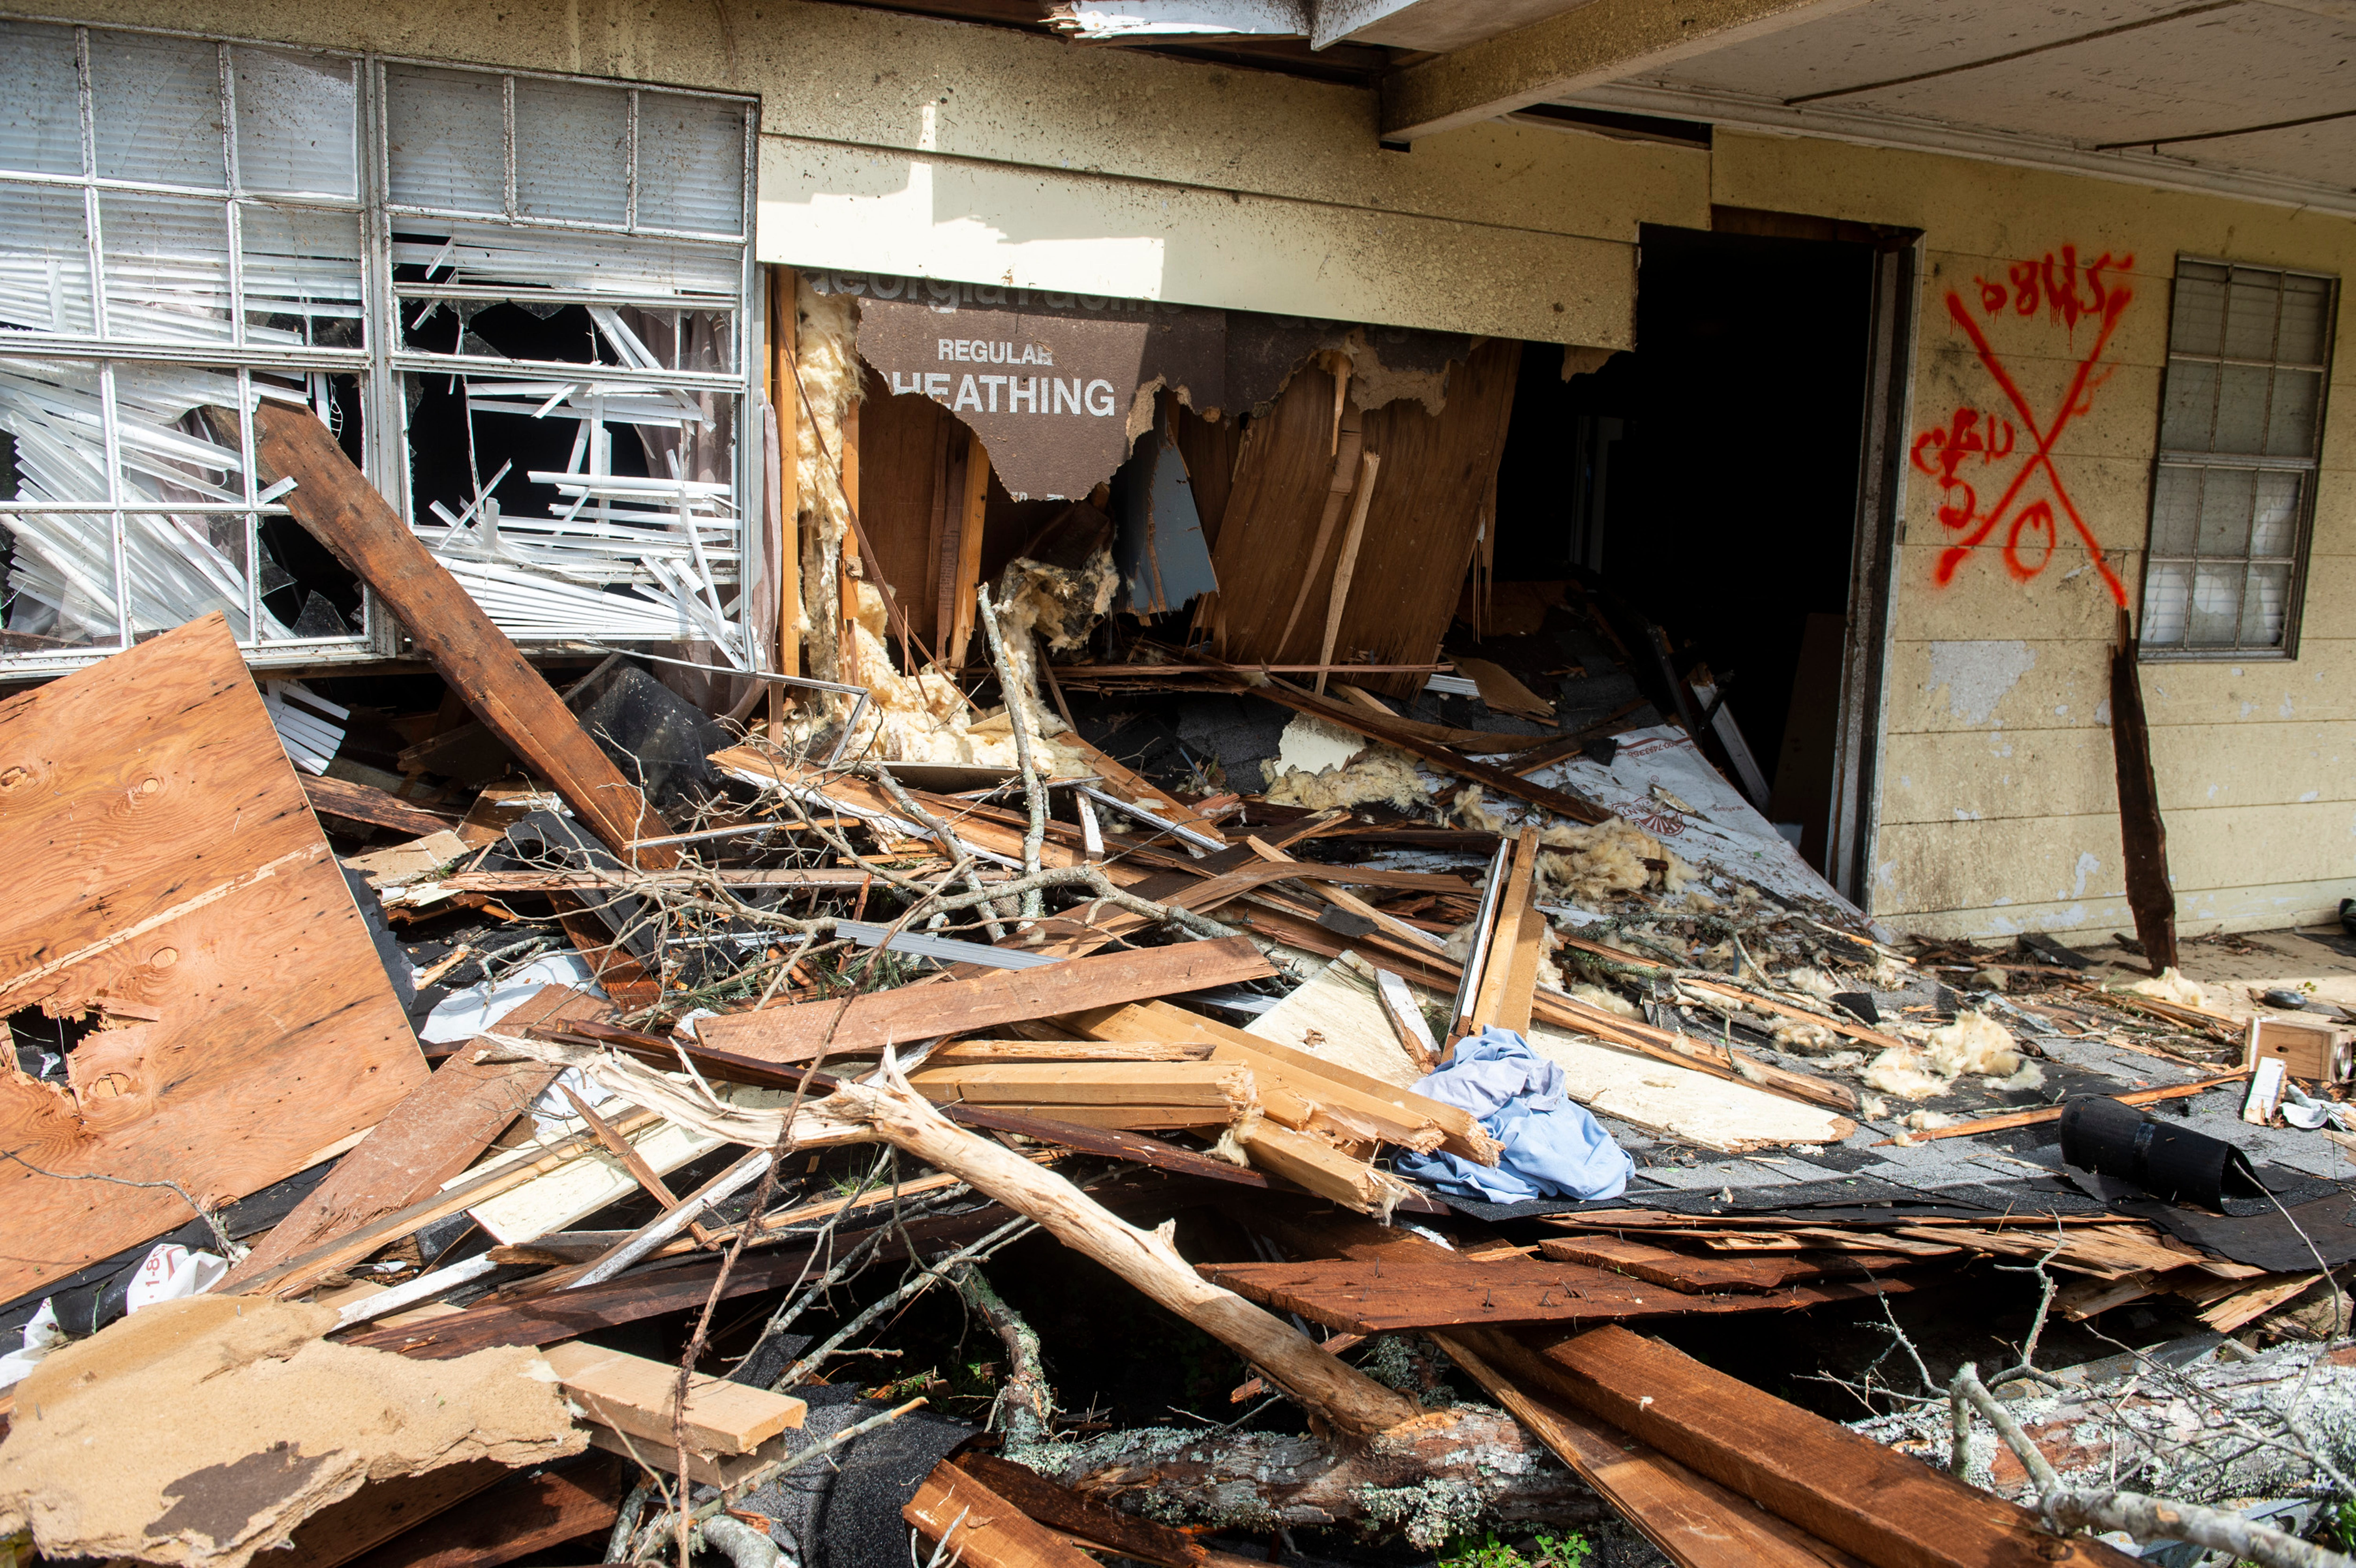 Public Tornado Shelters Can Do More Harm than Good, Oklahoma